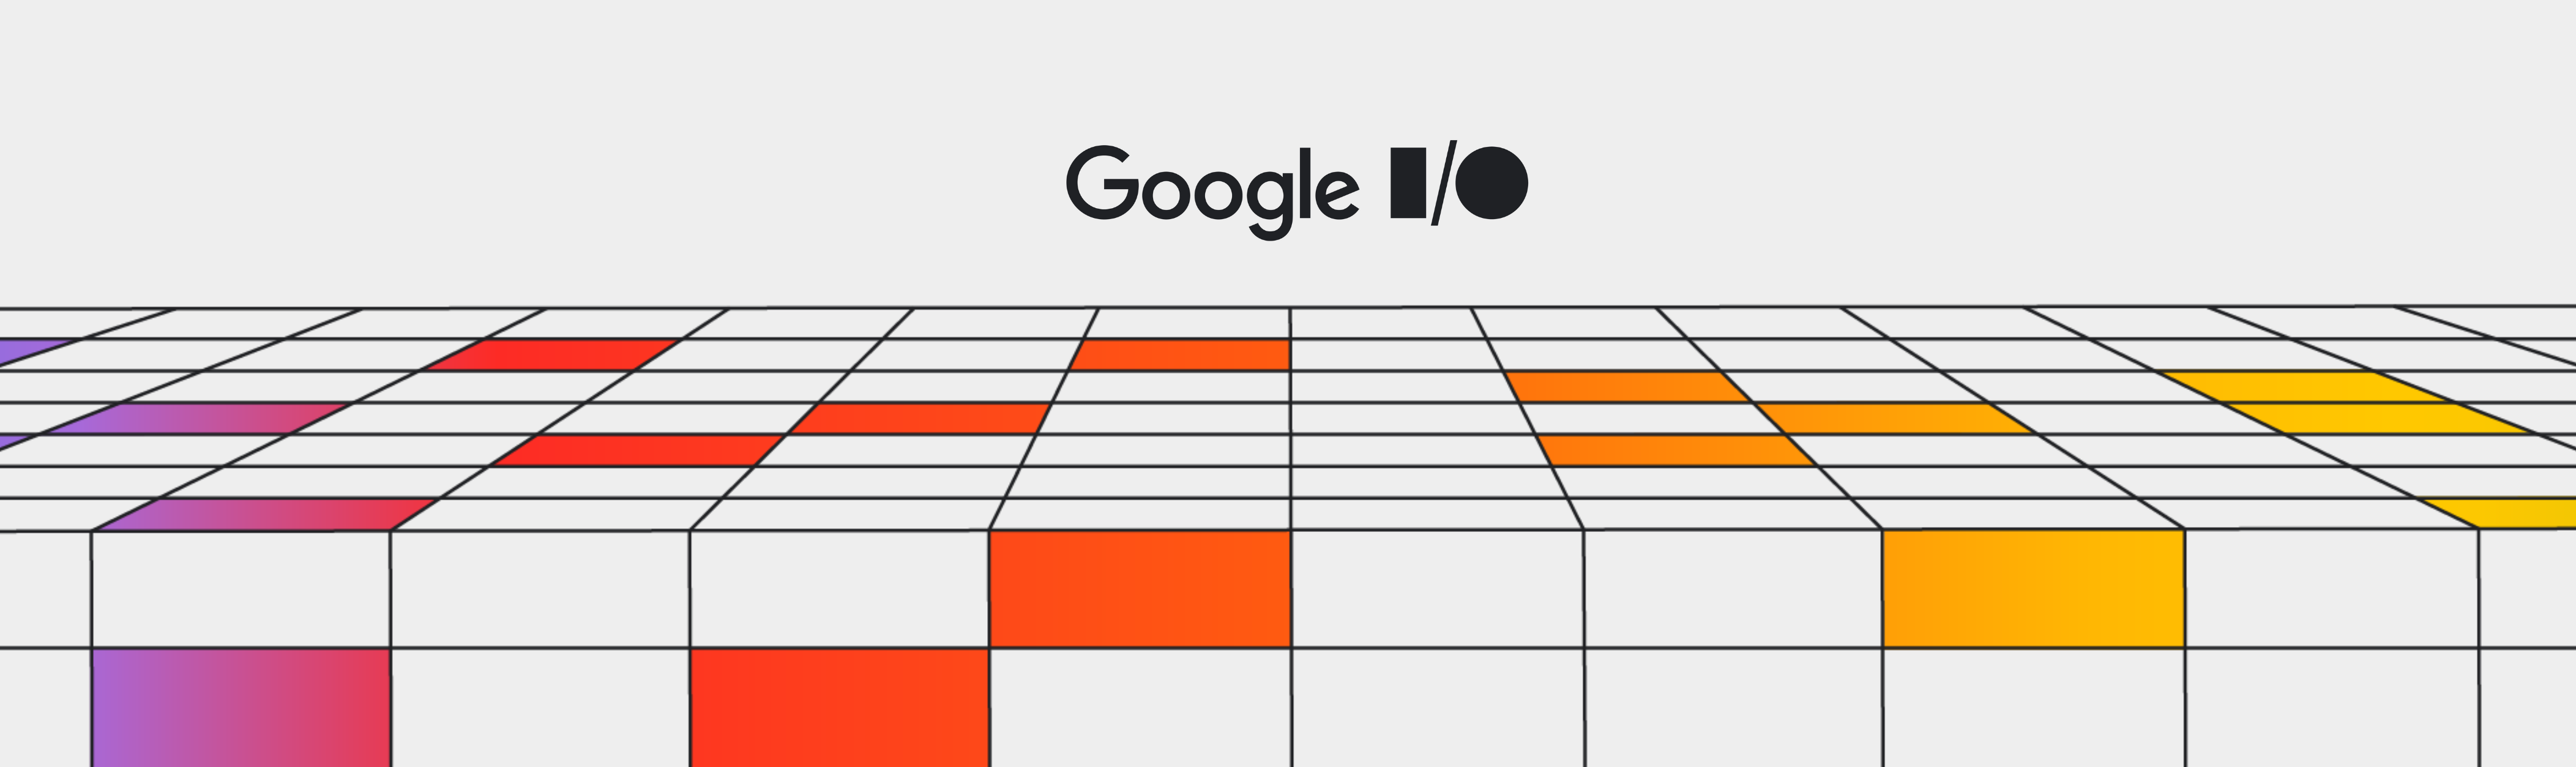 Google-IO-24-Banner (1)